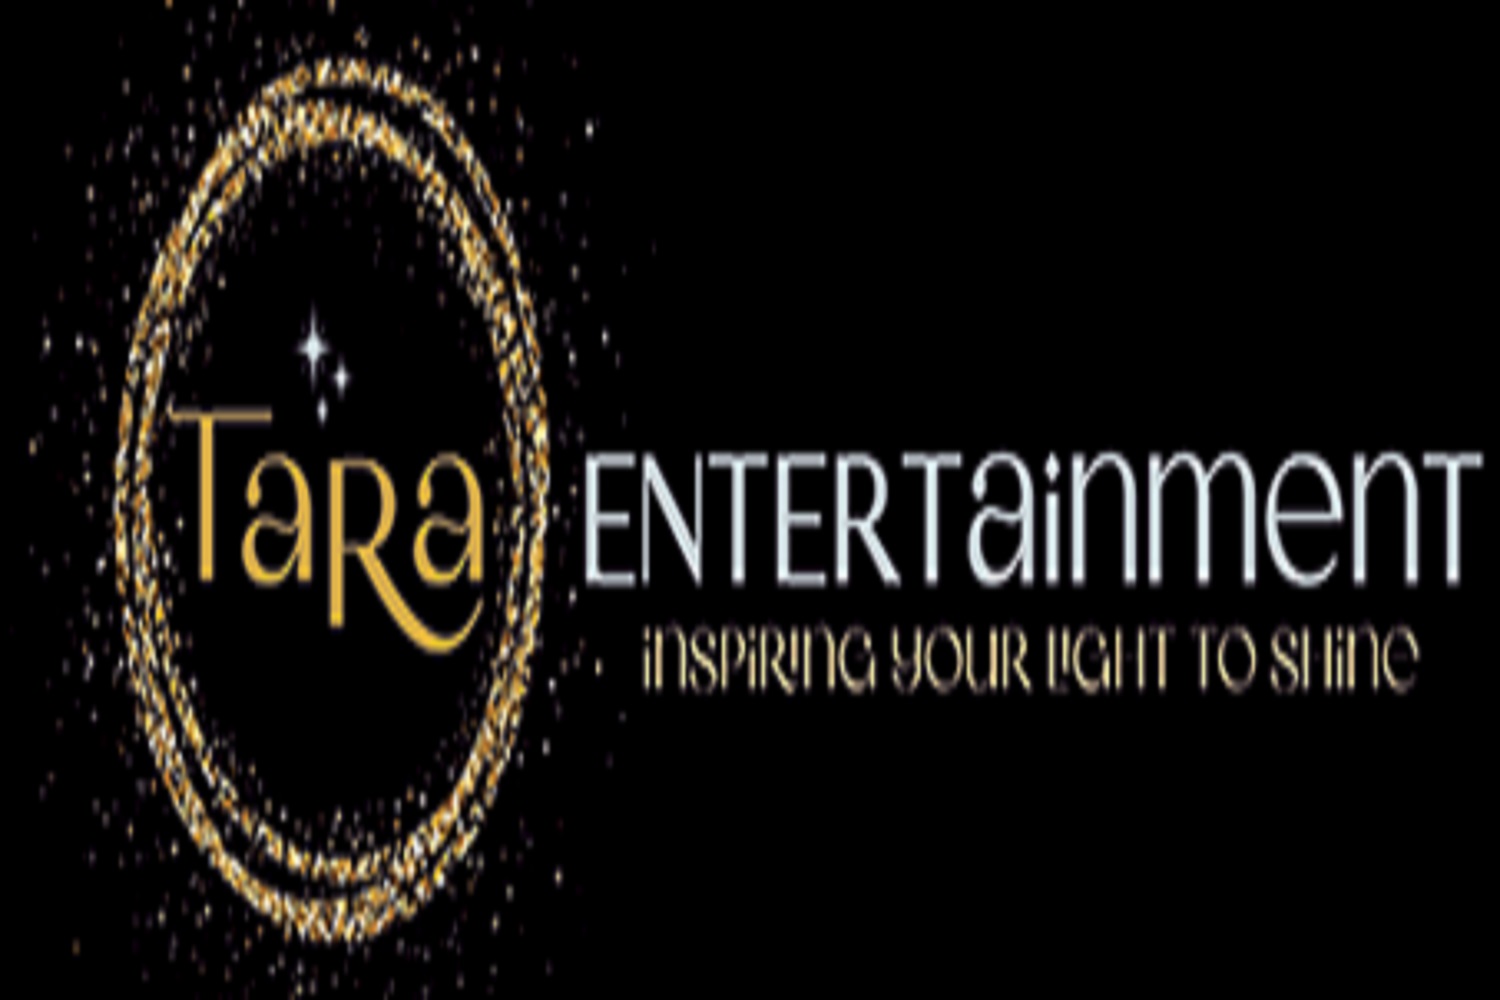 Tara Entertainment